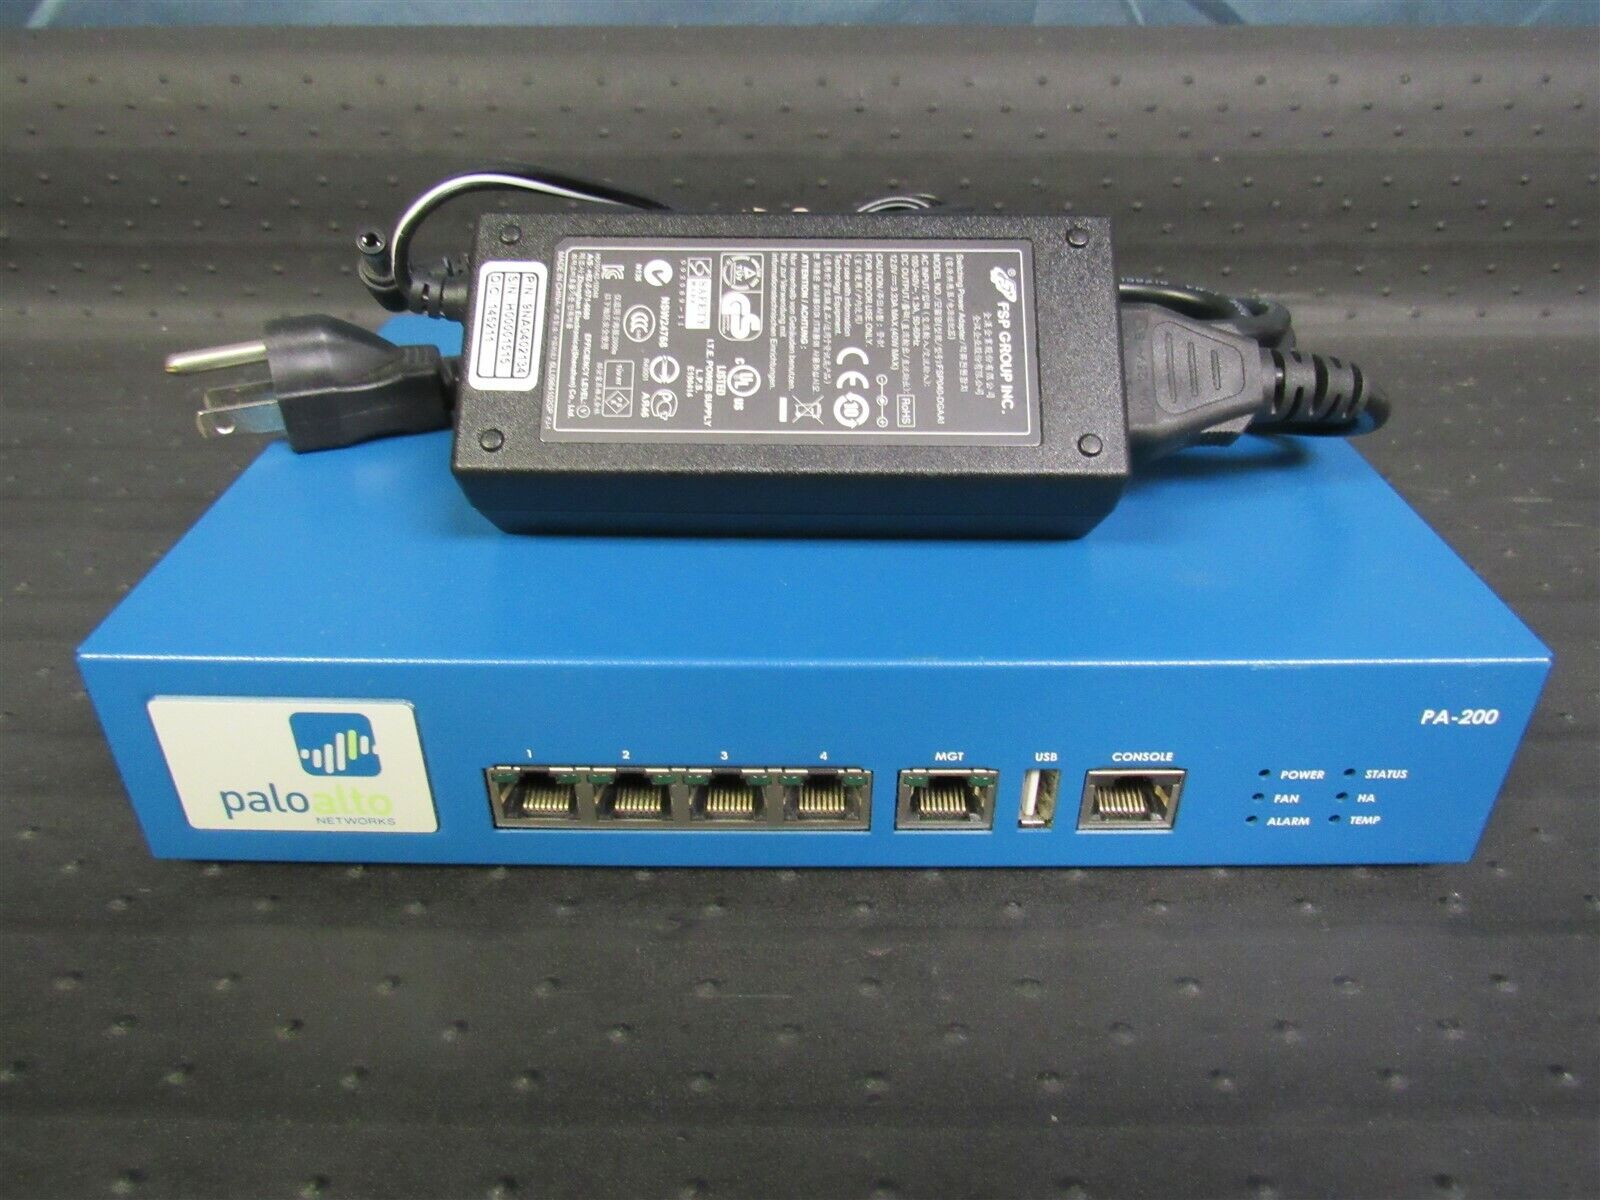 Palo Alto Networks PA-200 Firewall Security Appliance w/ AC Adapter